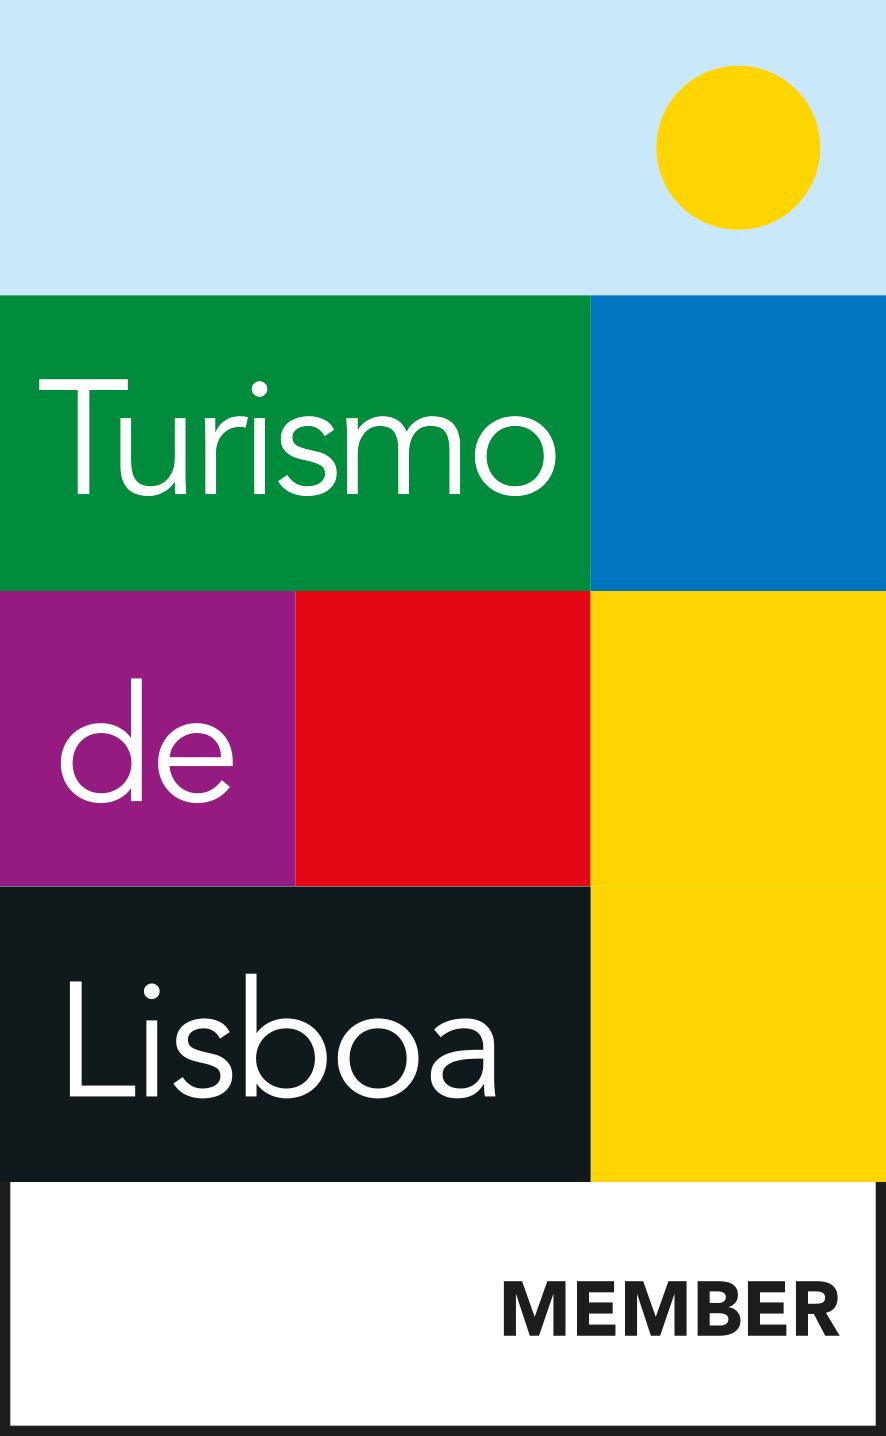 Turismo de Lisboa Membro